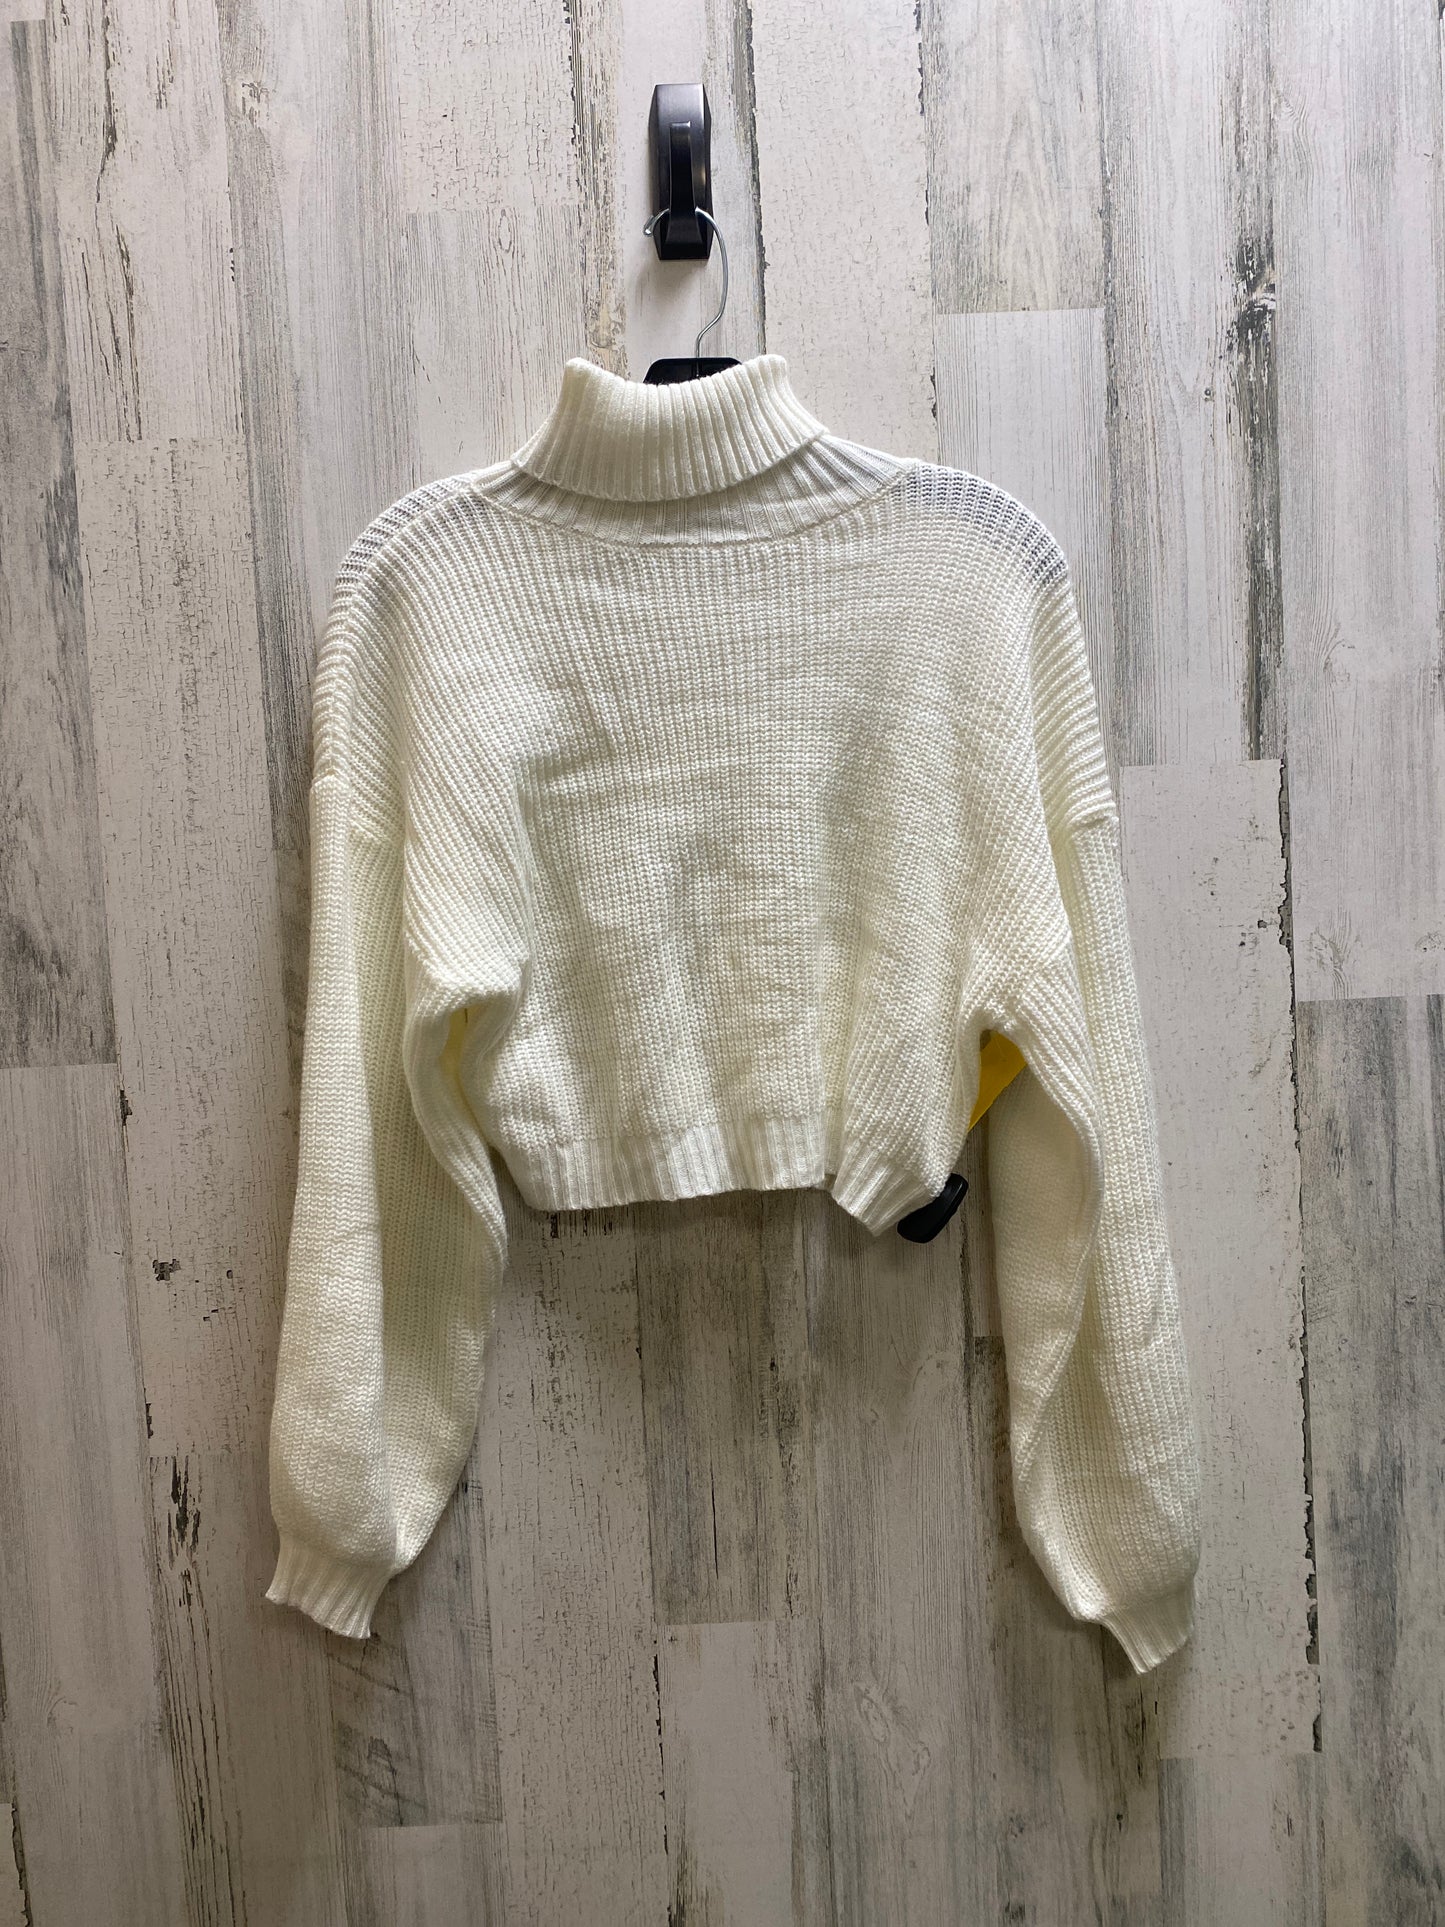 Sweater By Zaful  Size: S